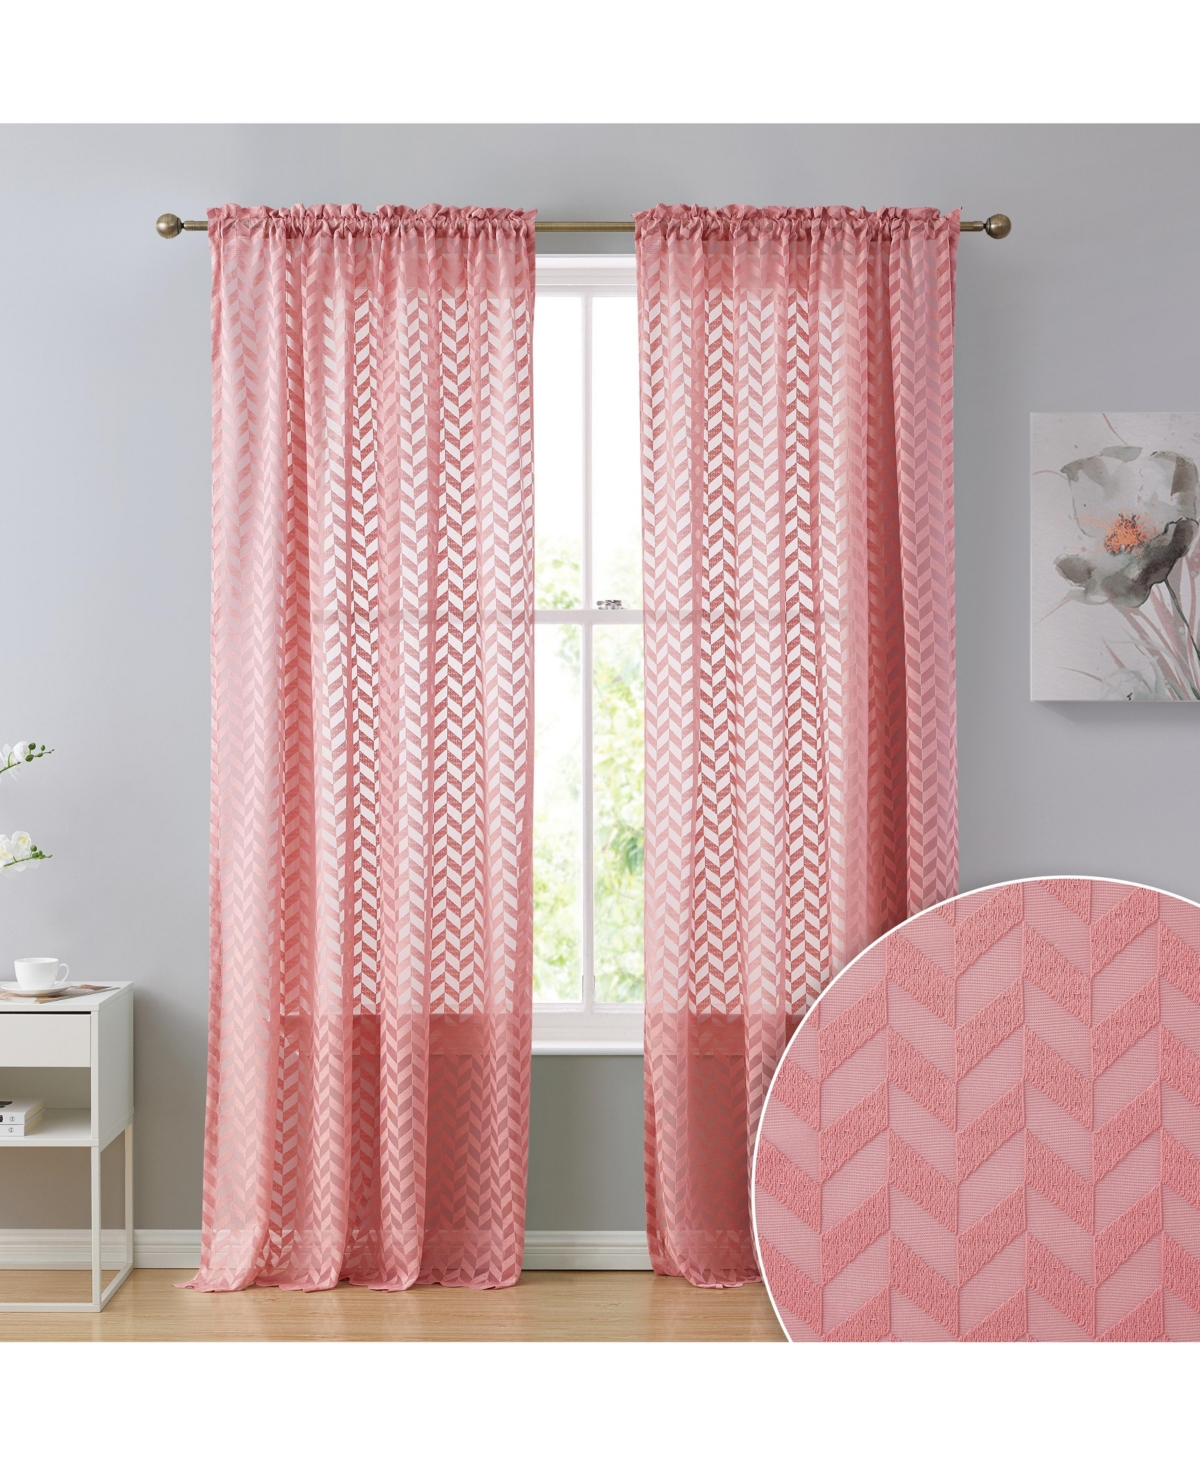 Herringbone Thick Semi Sheer Premium Rod Pocket Window Curtain Panels for Bedroom & Living Room - Set of 2 - Blush pink